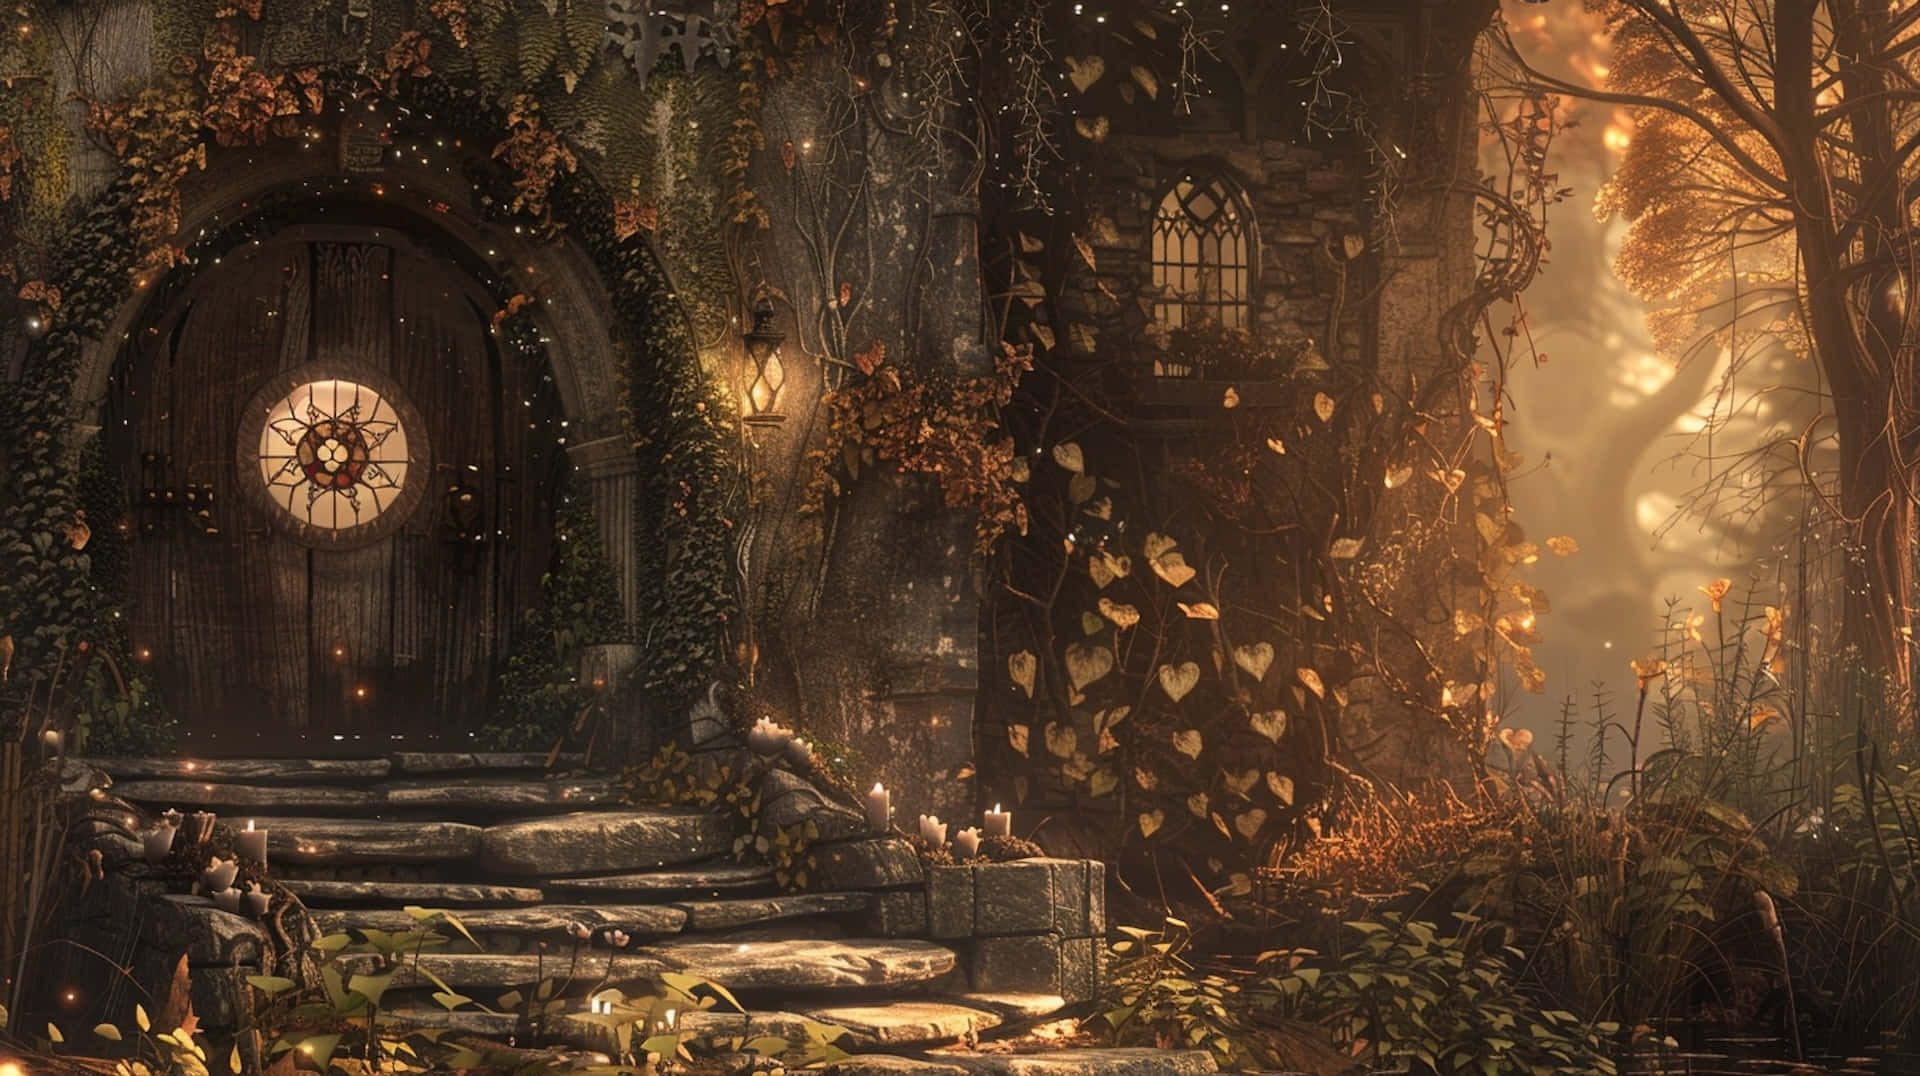 Enchanted Goblincore Forest Abode.jpg Wallpaper